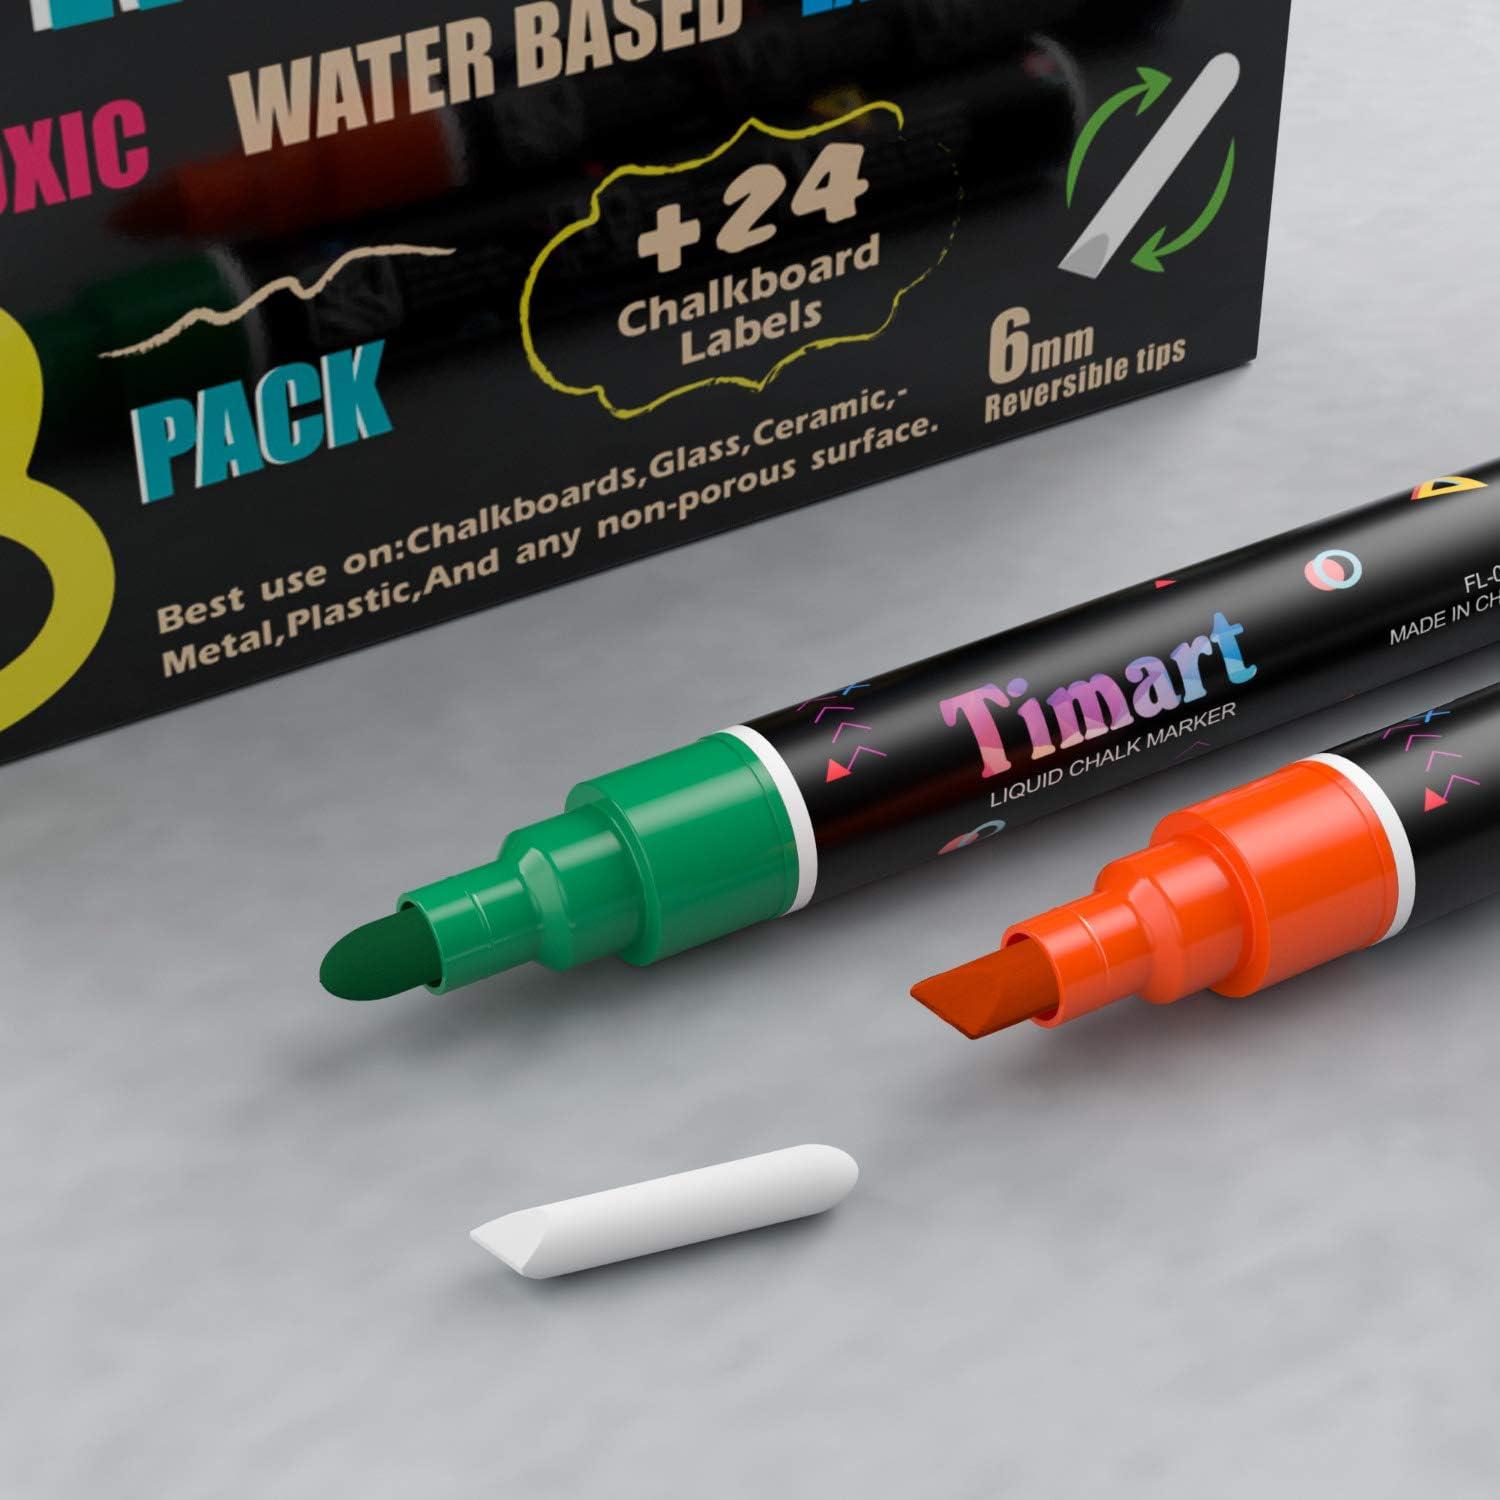 Liquid Chalk Marker Pen - White Dry Erase Marker - Chalk Markers for Chalkboard Signs, Windows, Blackboard, Glass - 6mm Reversible Tip (5 Pack) - 24